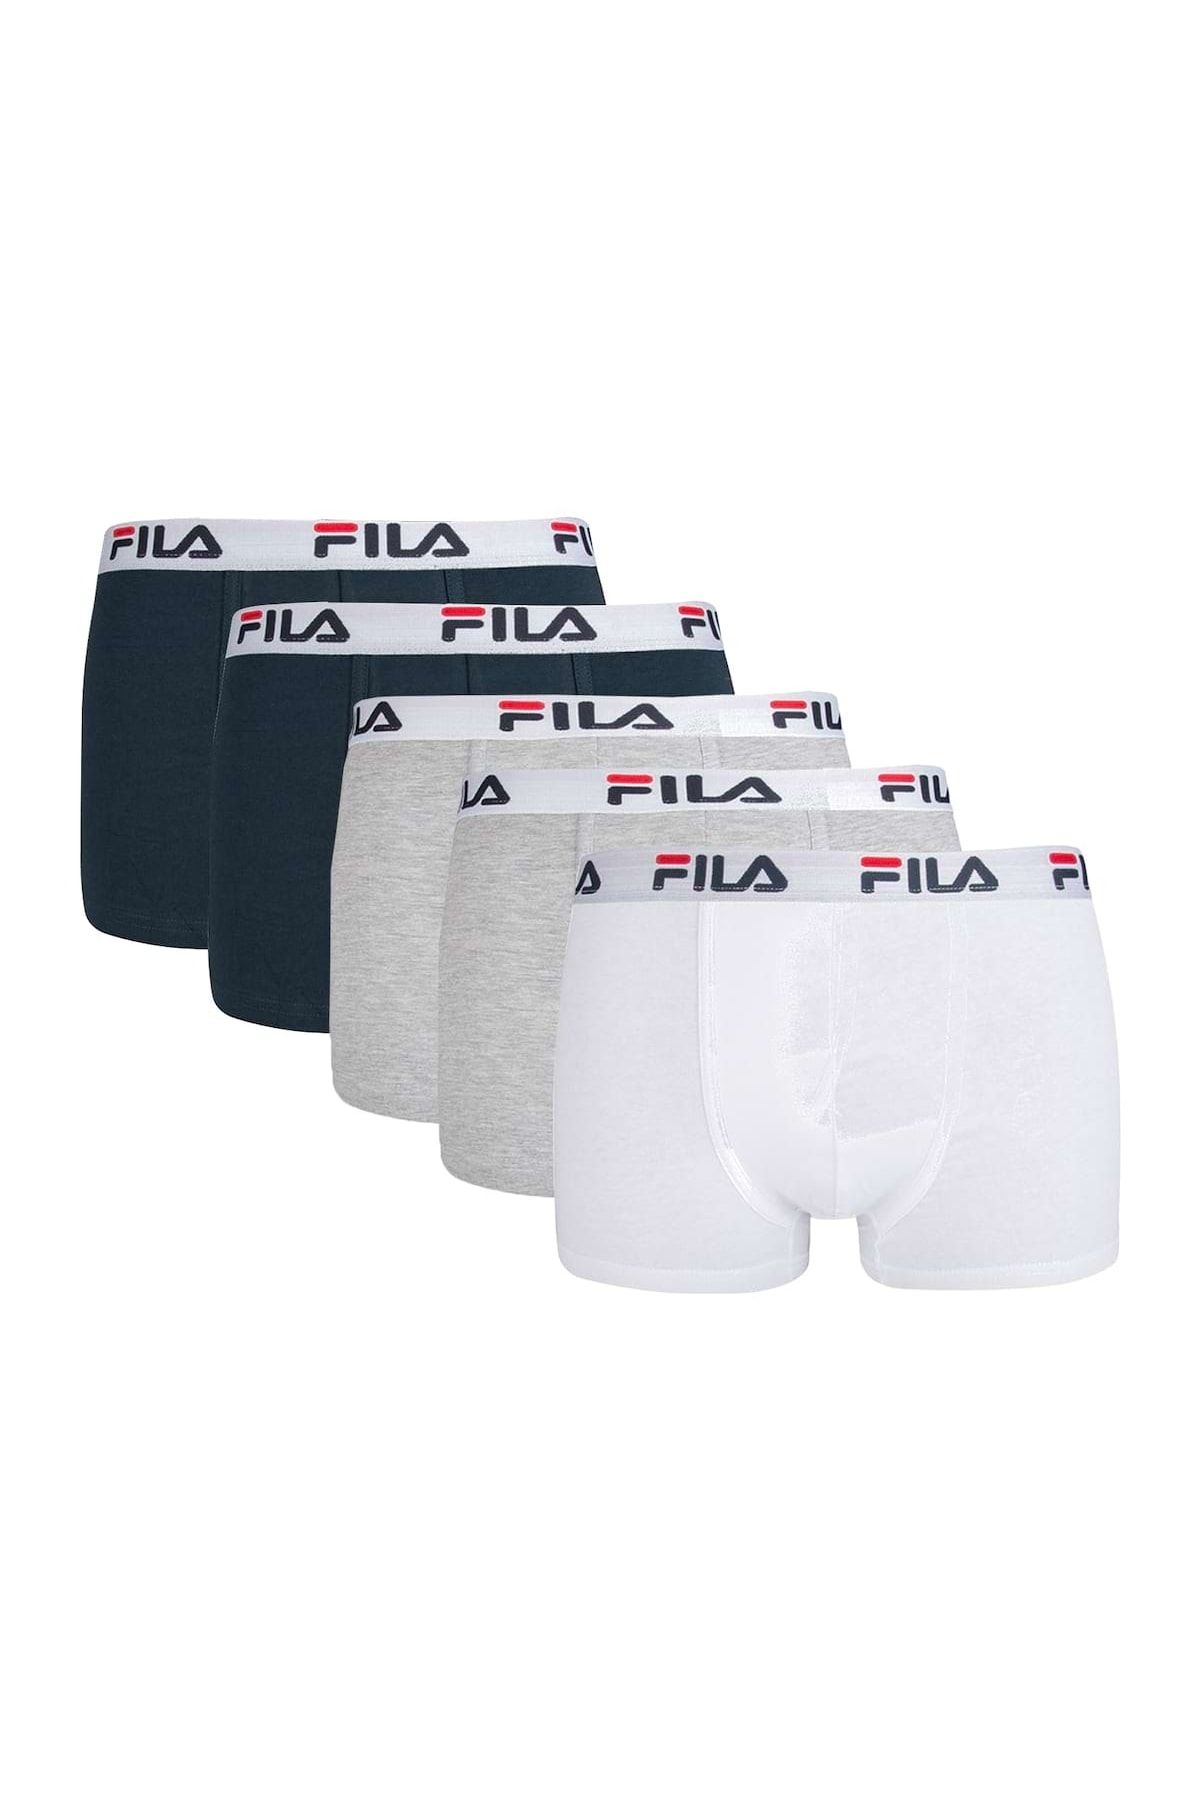 FILA Underwear Set - Multicolor - Plain - Trendyol